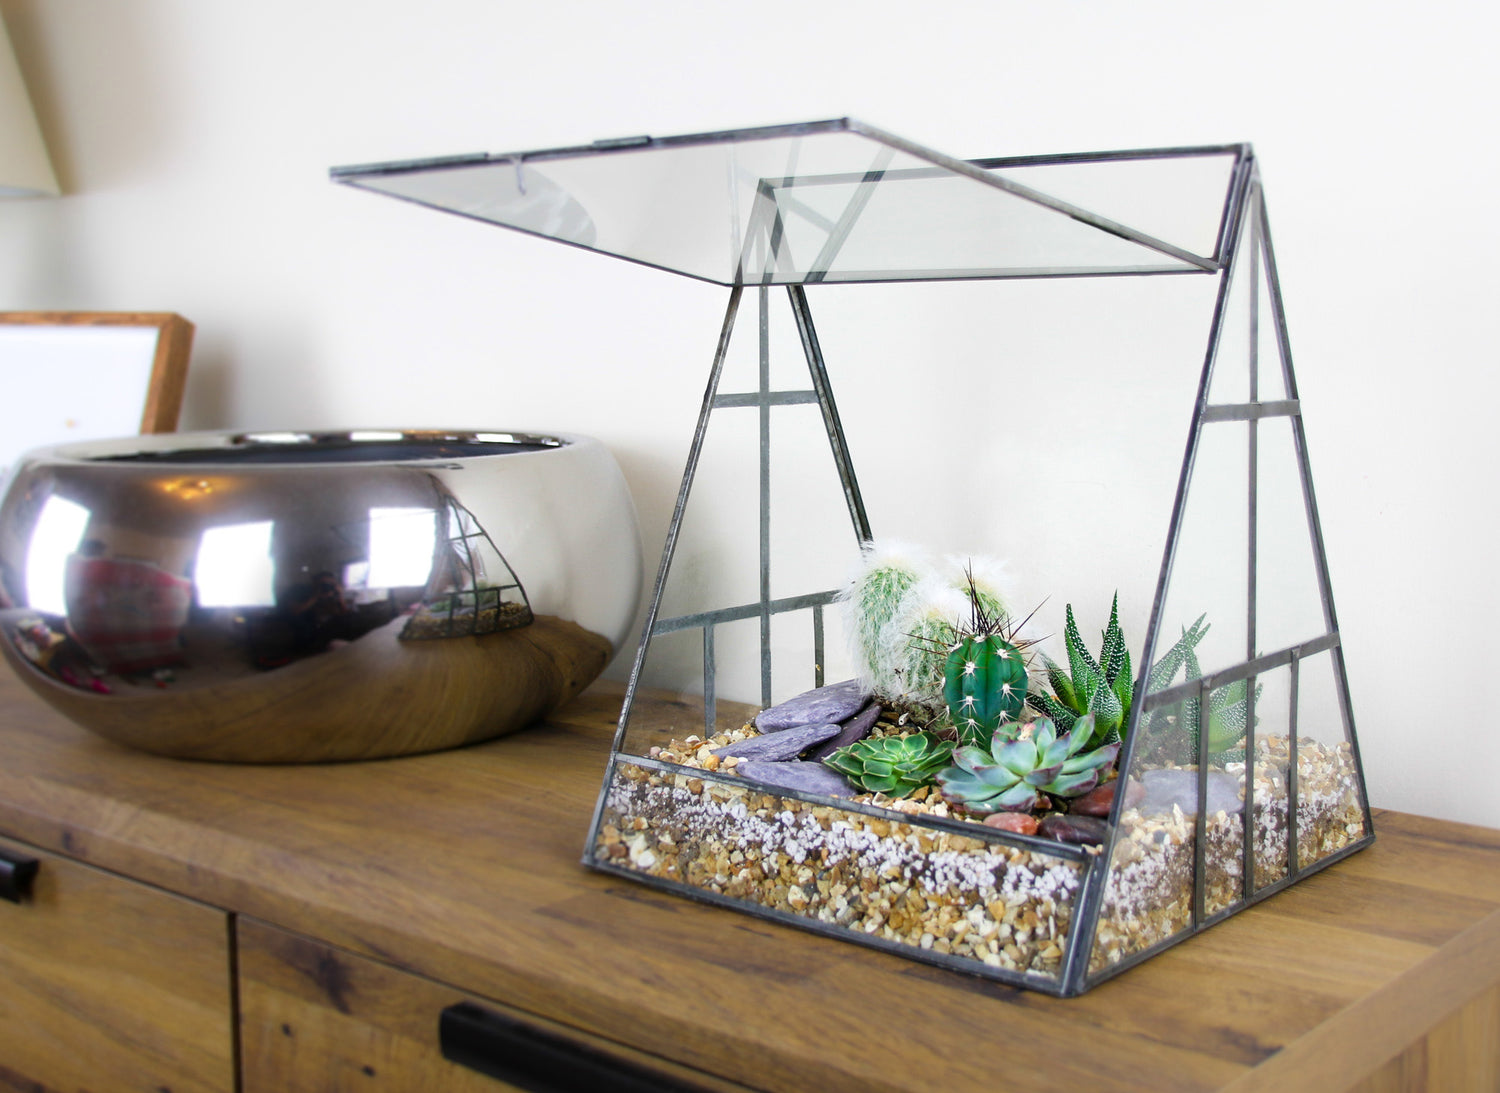 DIY Pyramid greenhouse terrarium Kit